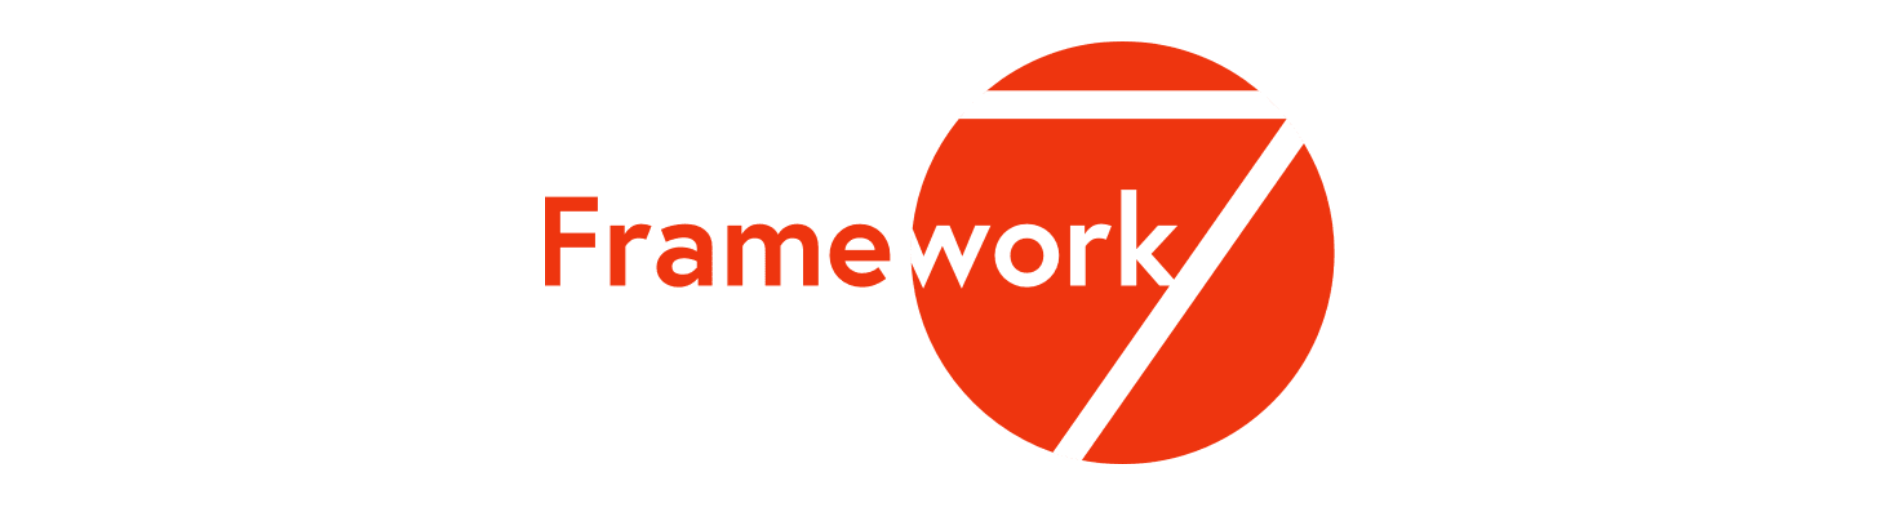 framework7-logo-web-development-hybrid-mobile-applications